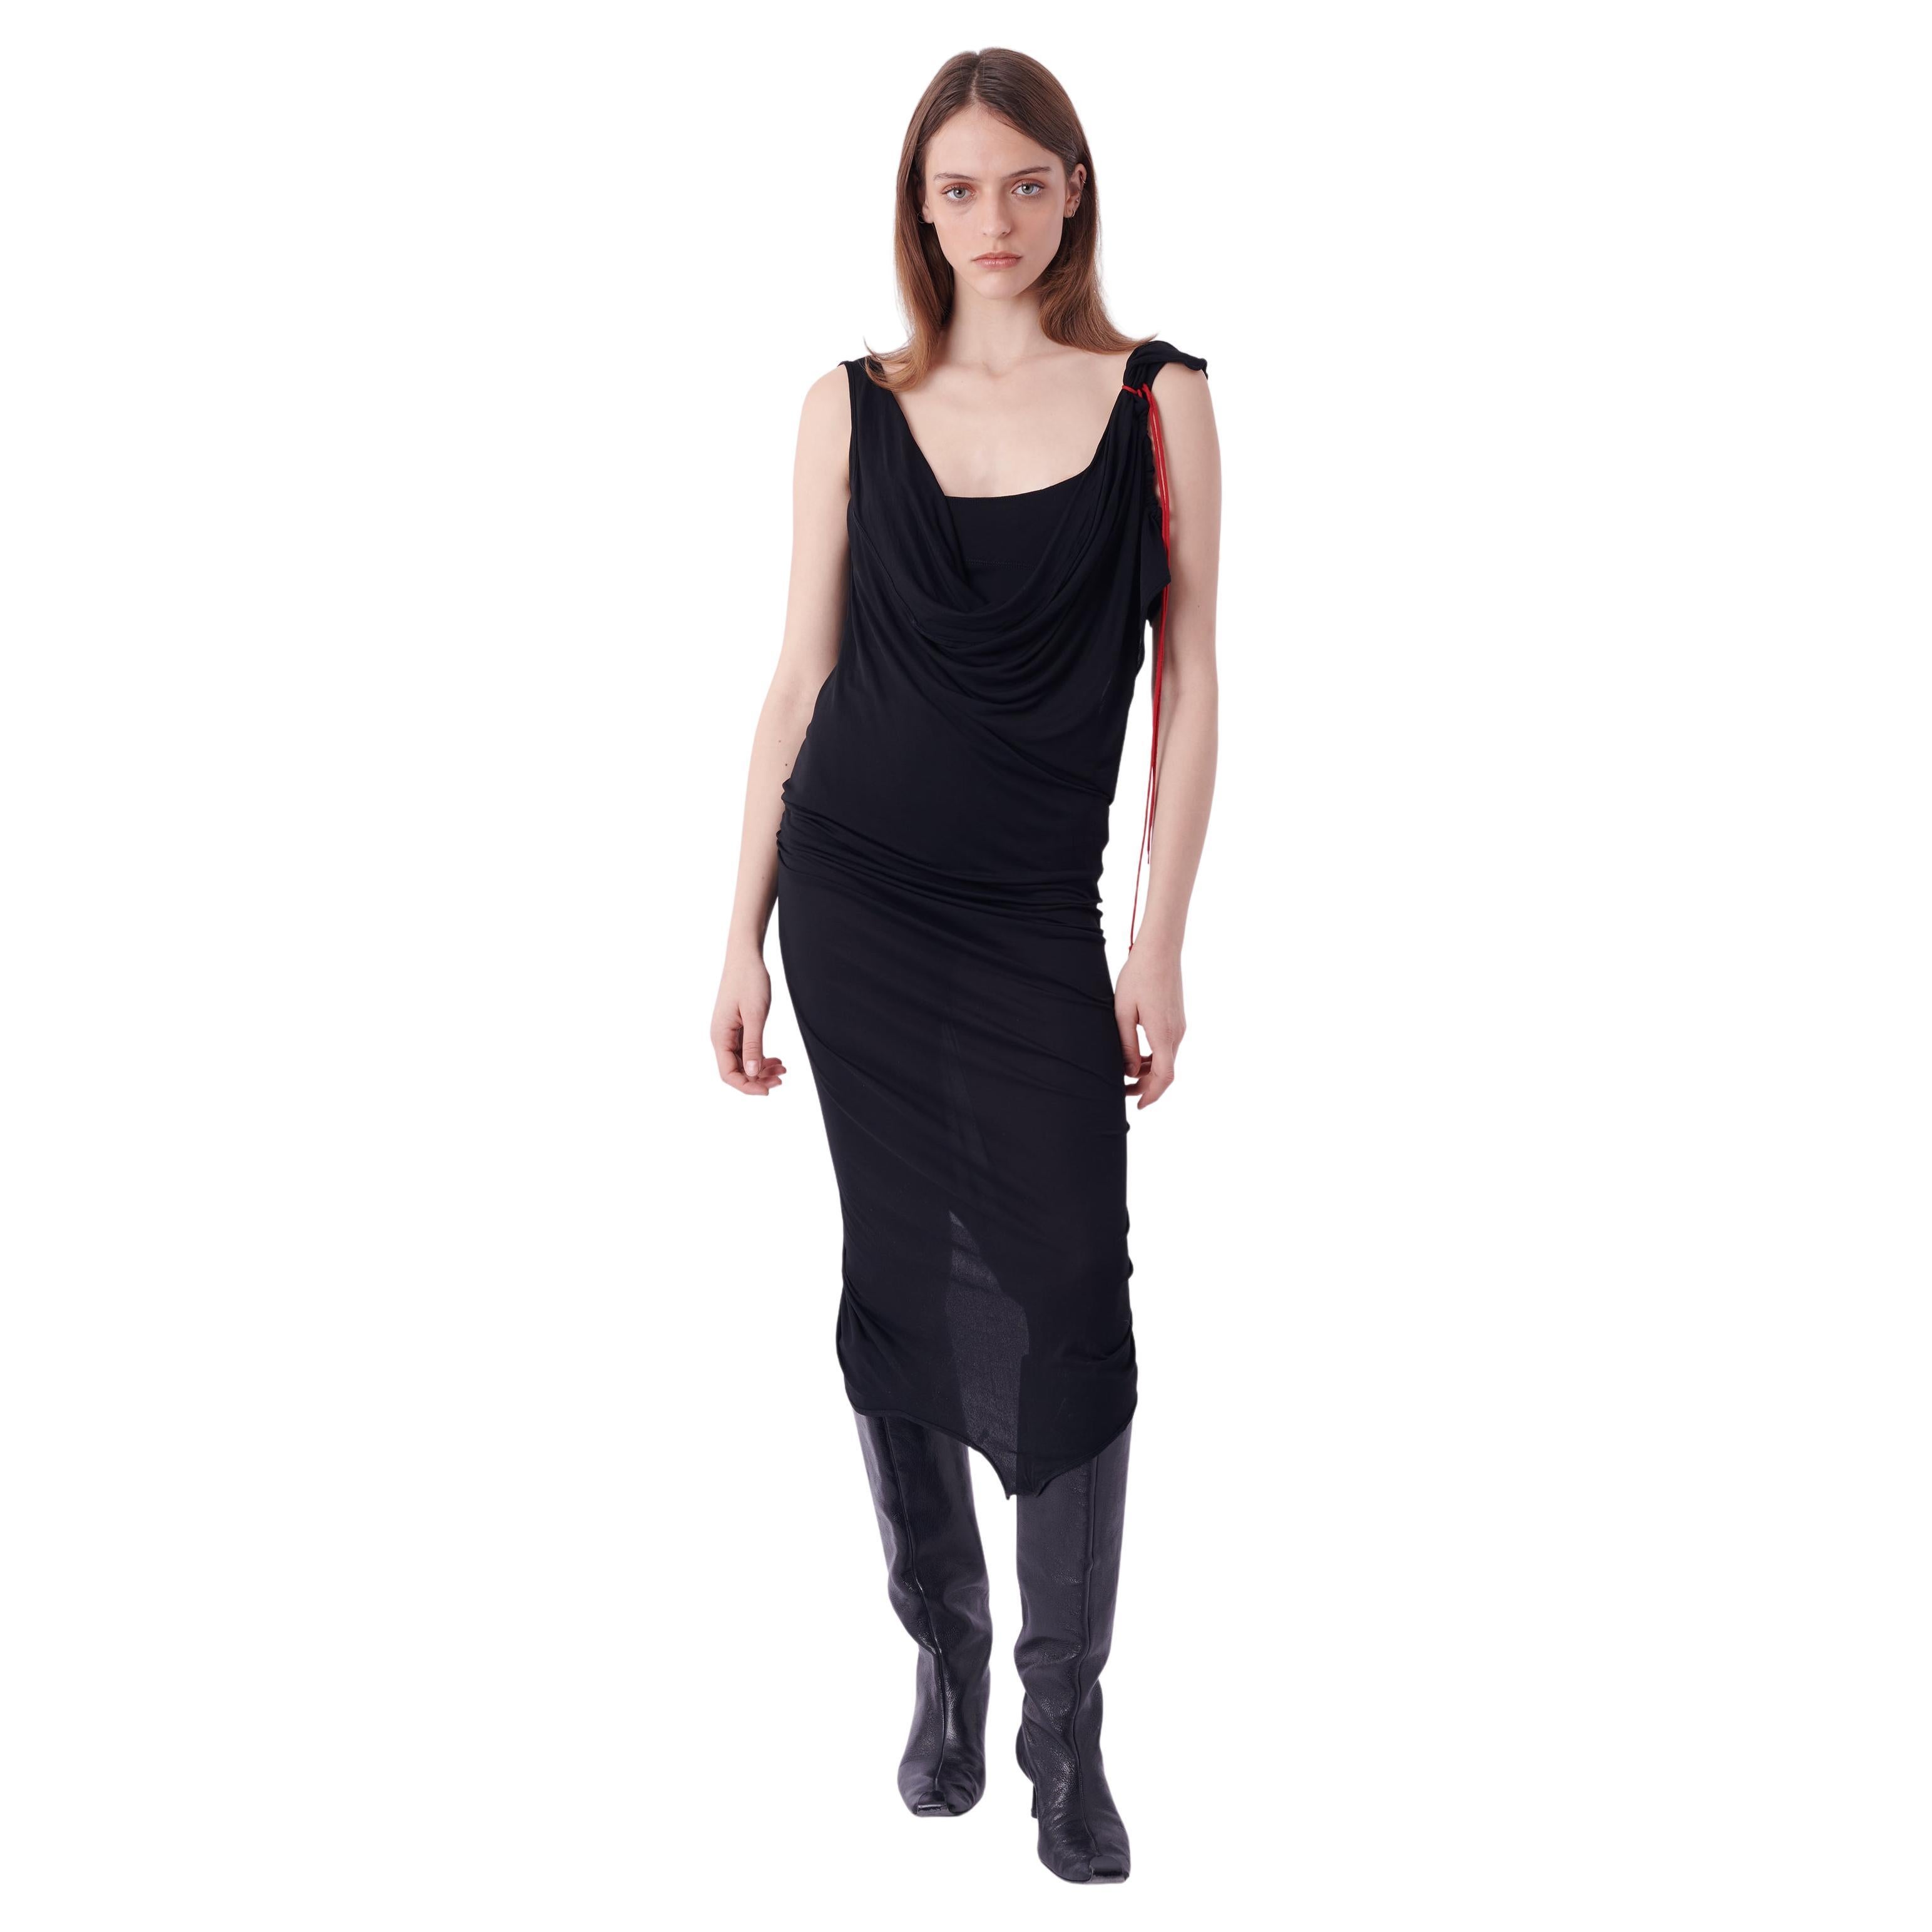 Vivienne Westwood S/S 2020 Runway Backless Black Dress For Sale